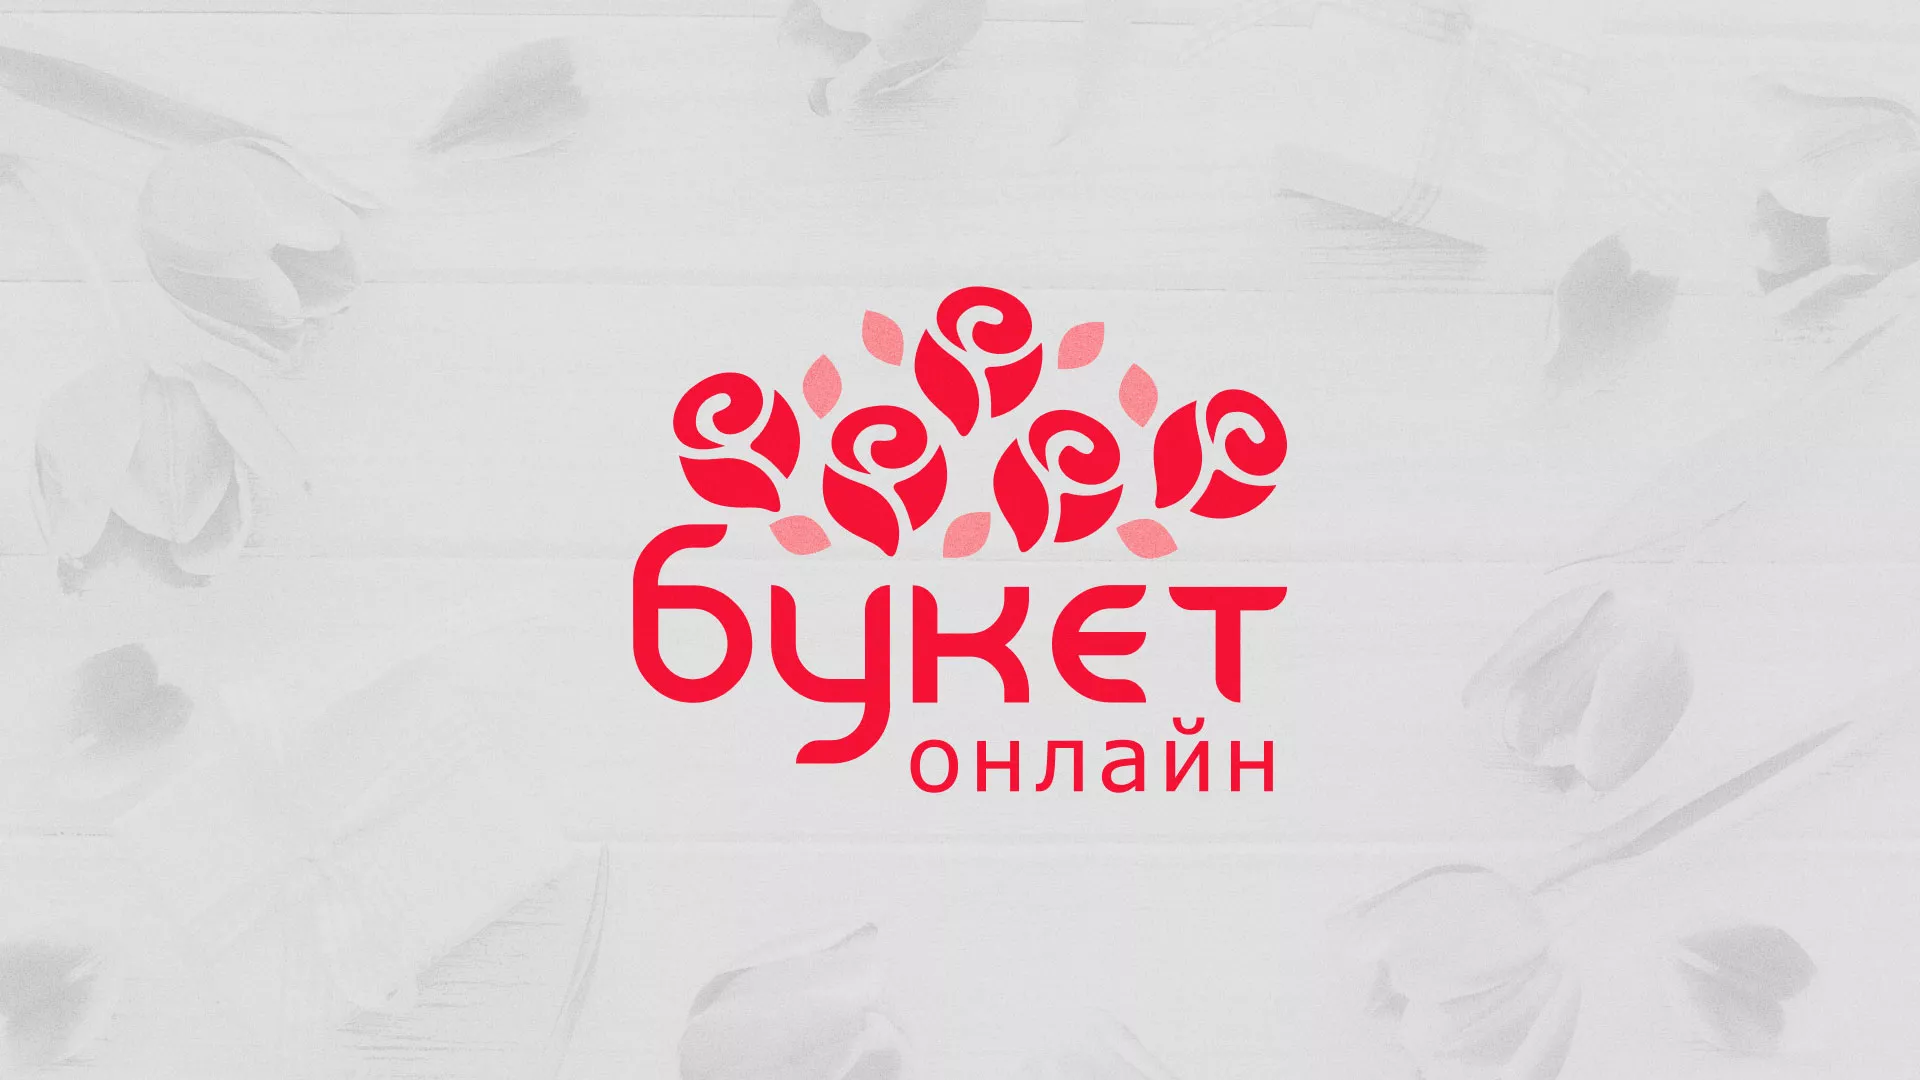 Создание интернет-магазина «Букет-онлайн» по цветам в Бирюсинске